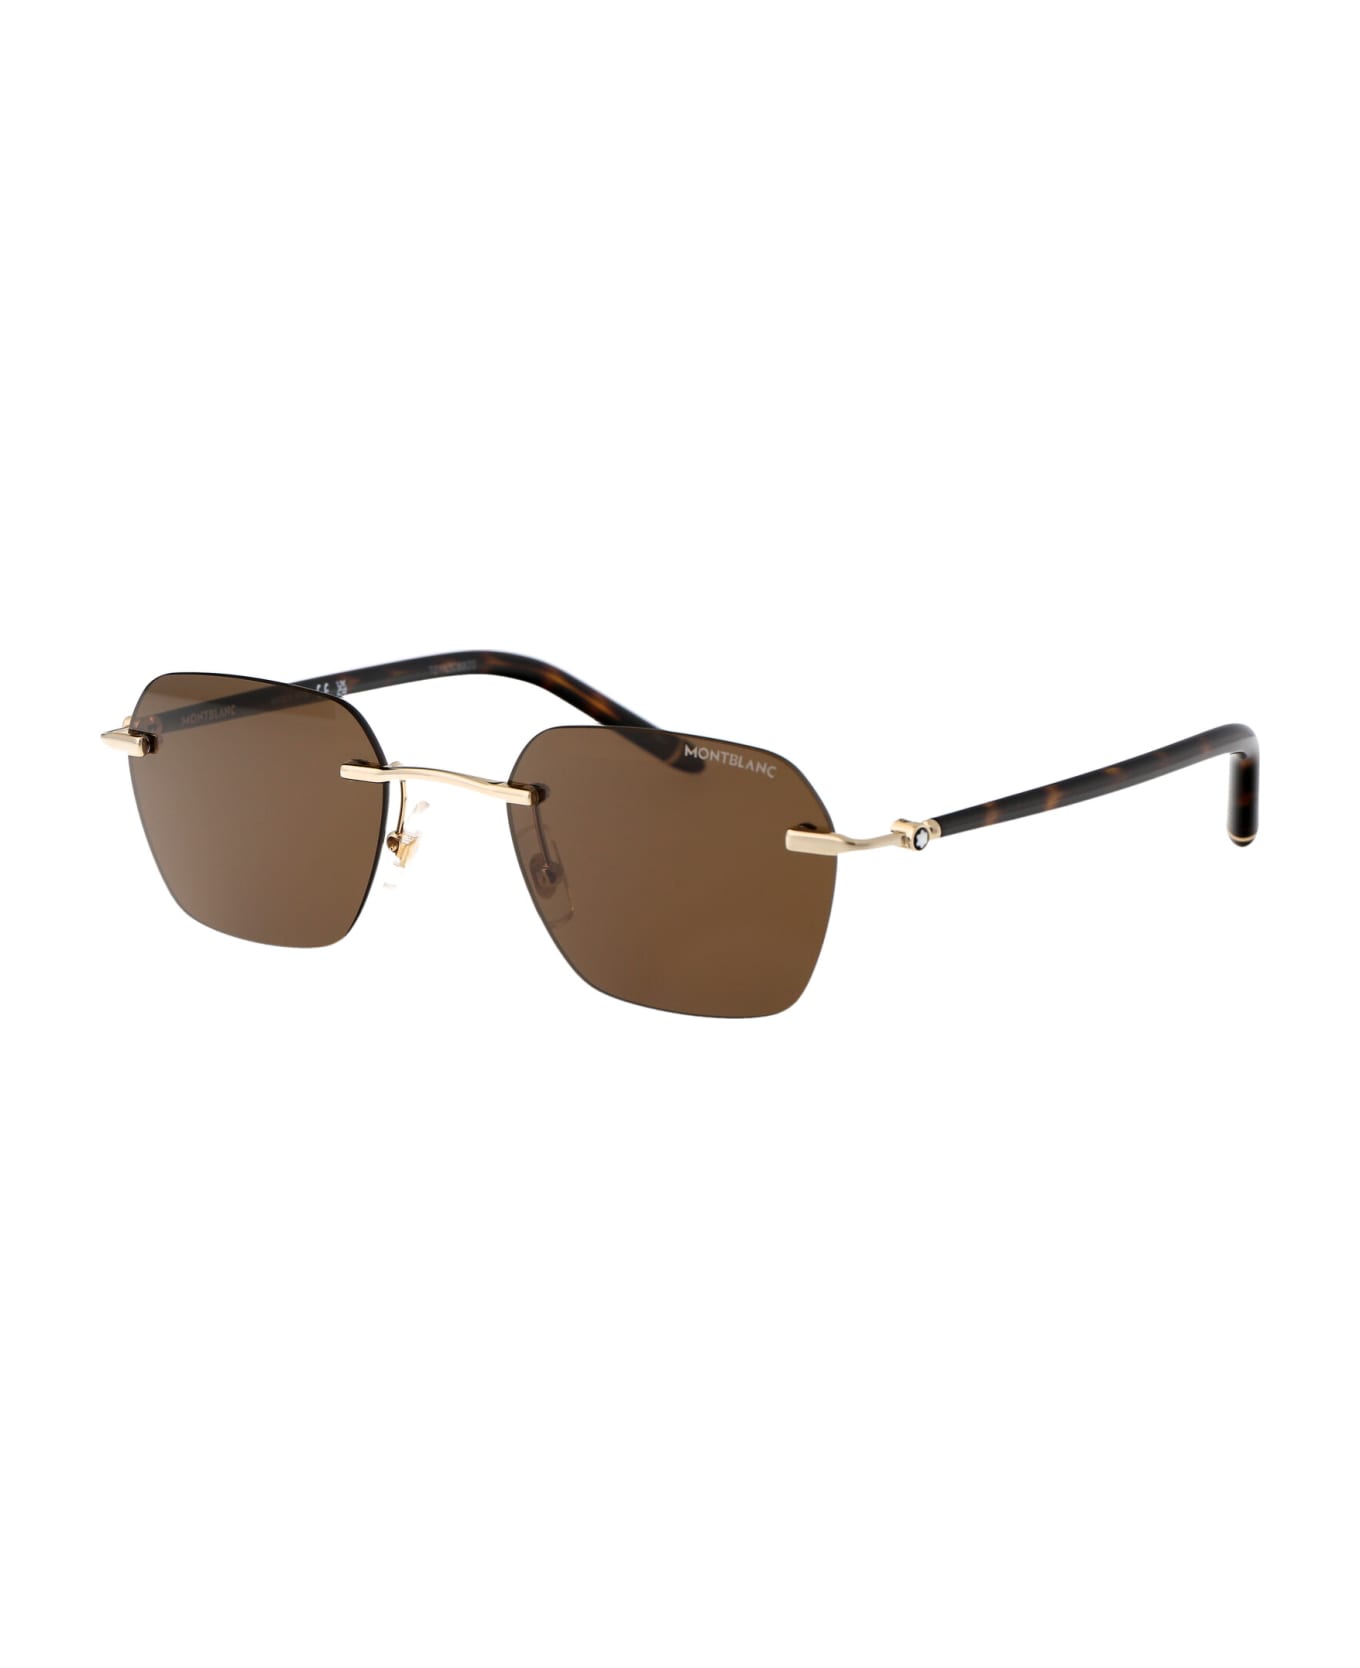 Montblanc Mb0270s Sunglasses - 004 GOLD HAVANA BROWN